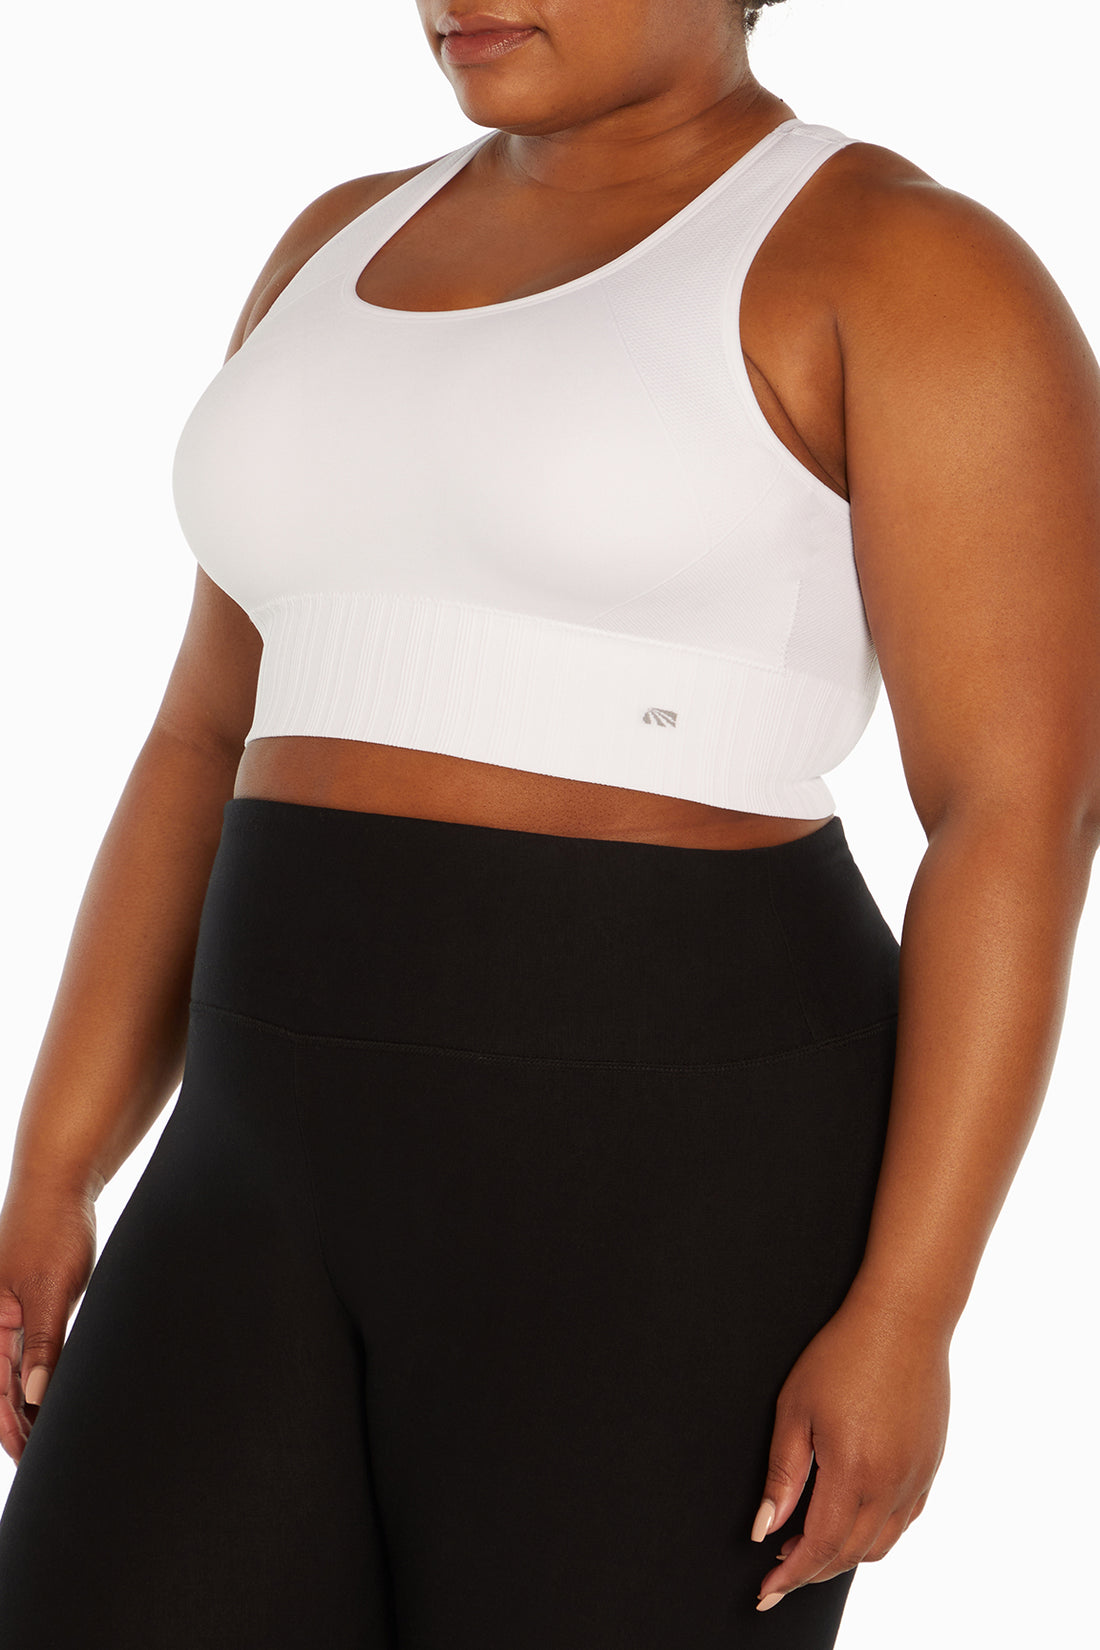 MTA Sport Women's Black Sports Bra Size XXL 48711